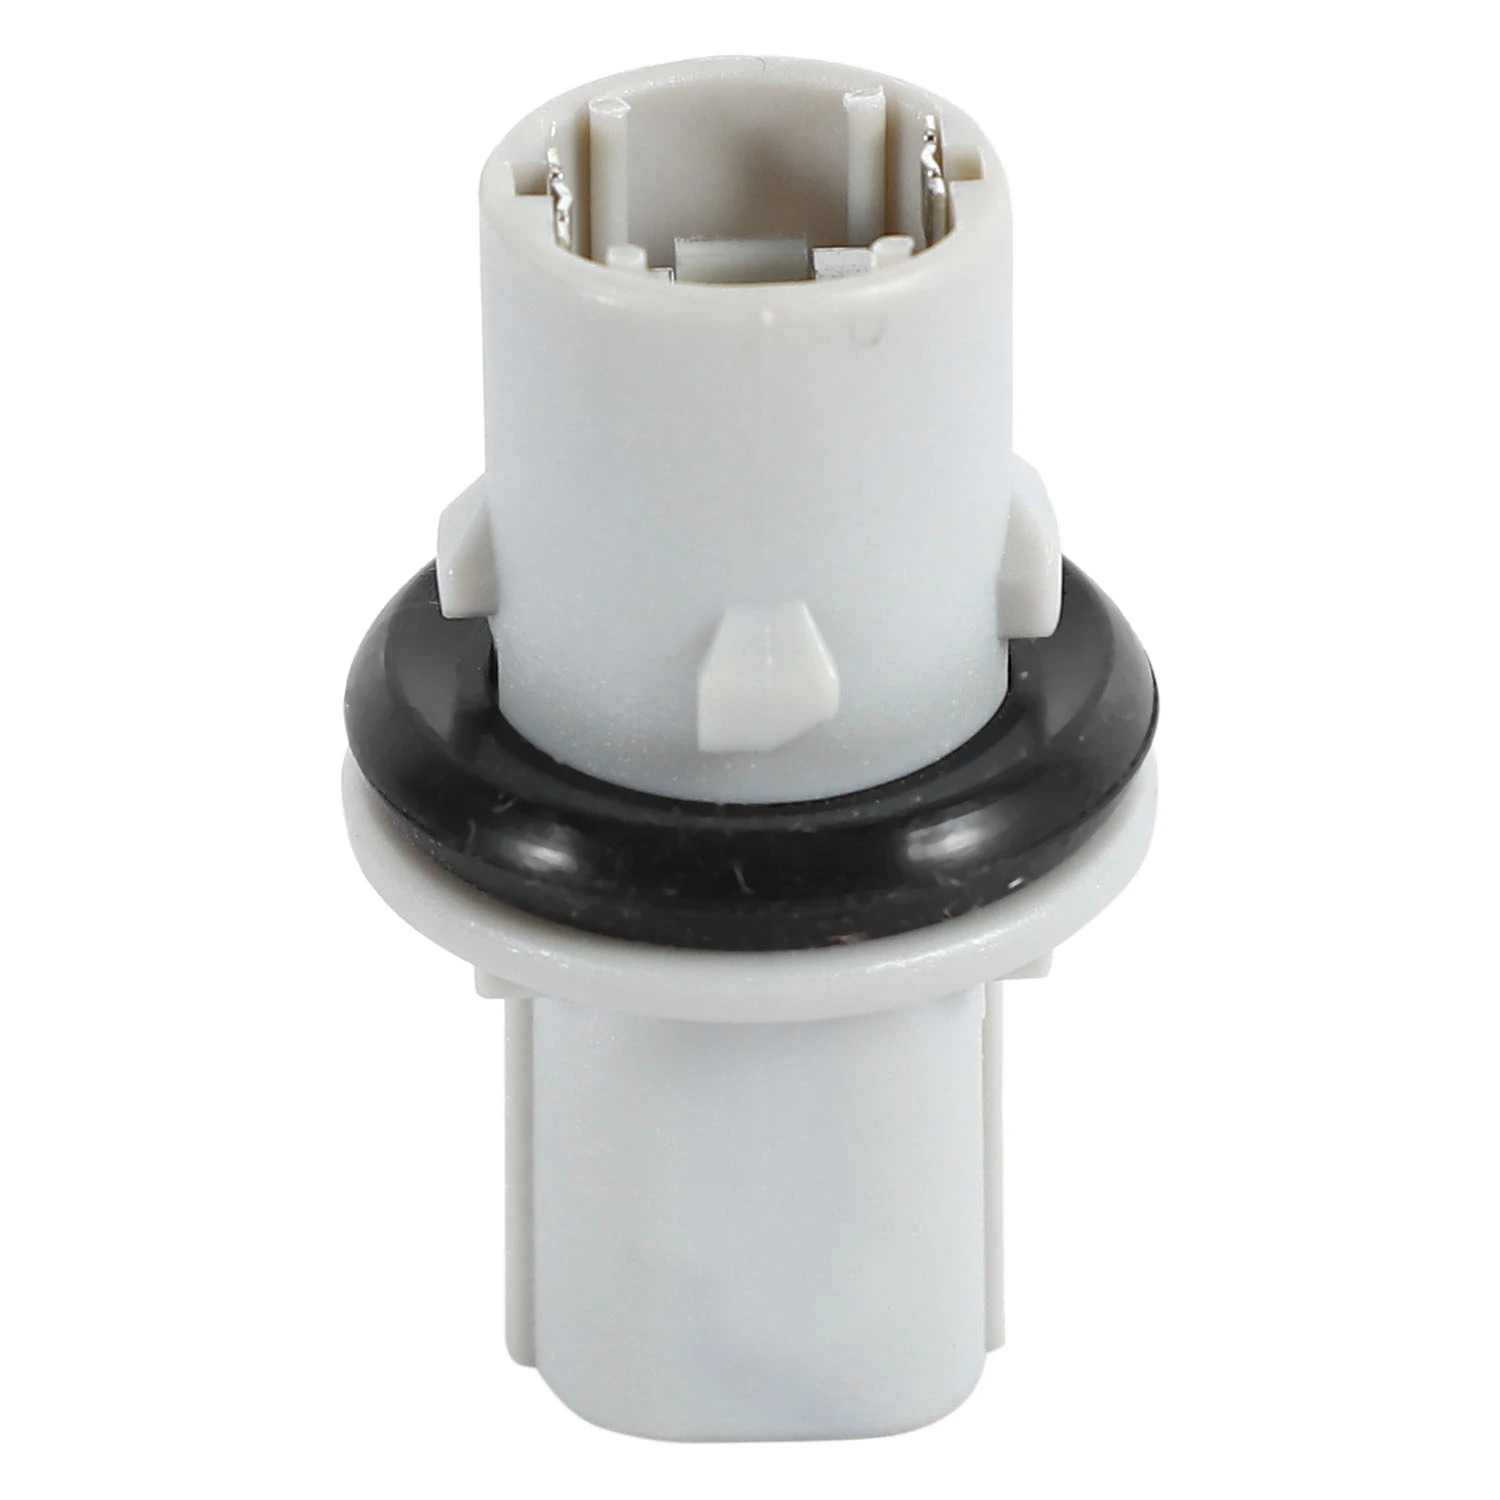 Лампа бокового указателя поворота с цоколем в сборе (T10) для ACCORD FIT VEZEL RL 33304-S5A-003